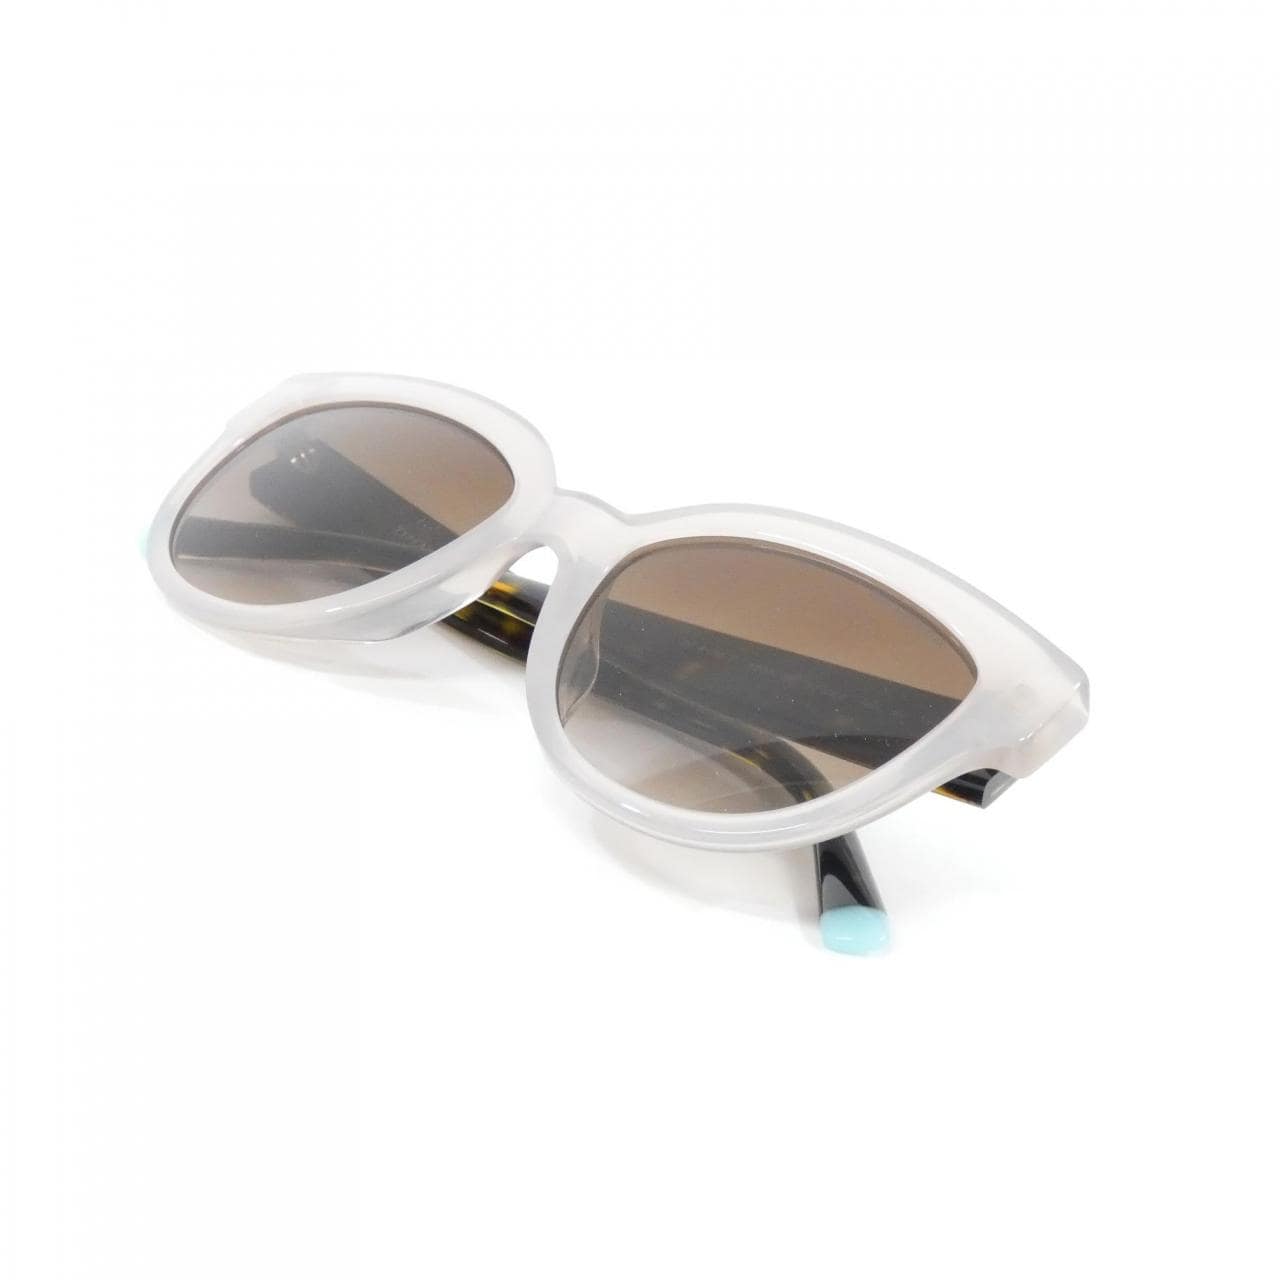 [BRAND NEW] TIFFANY 4186F Sunglasses